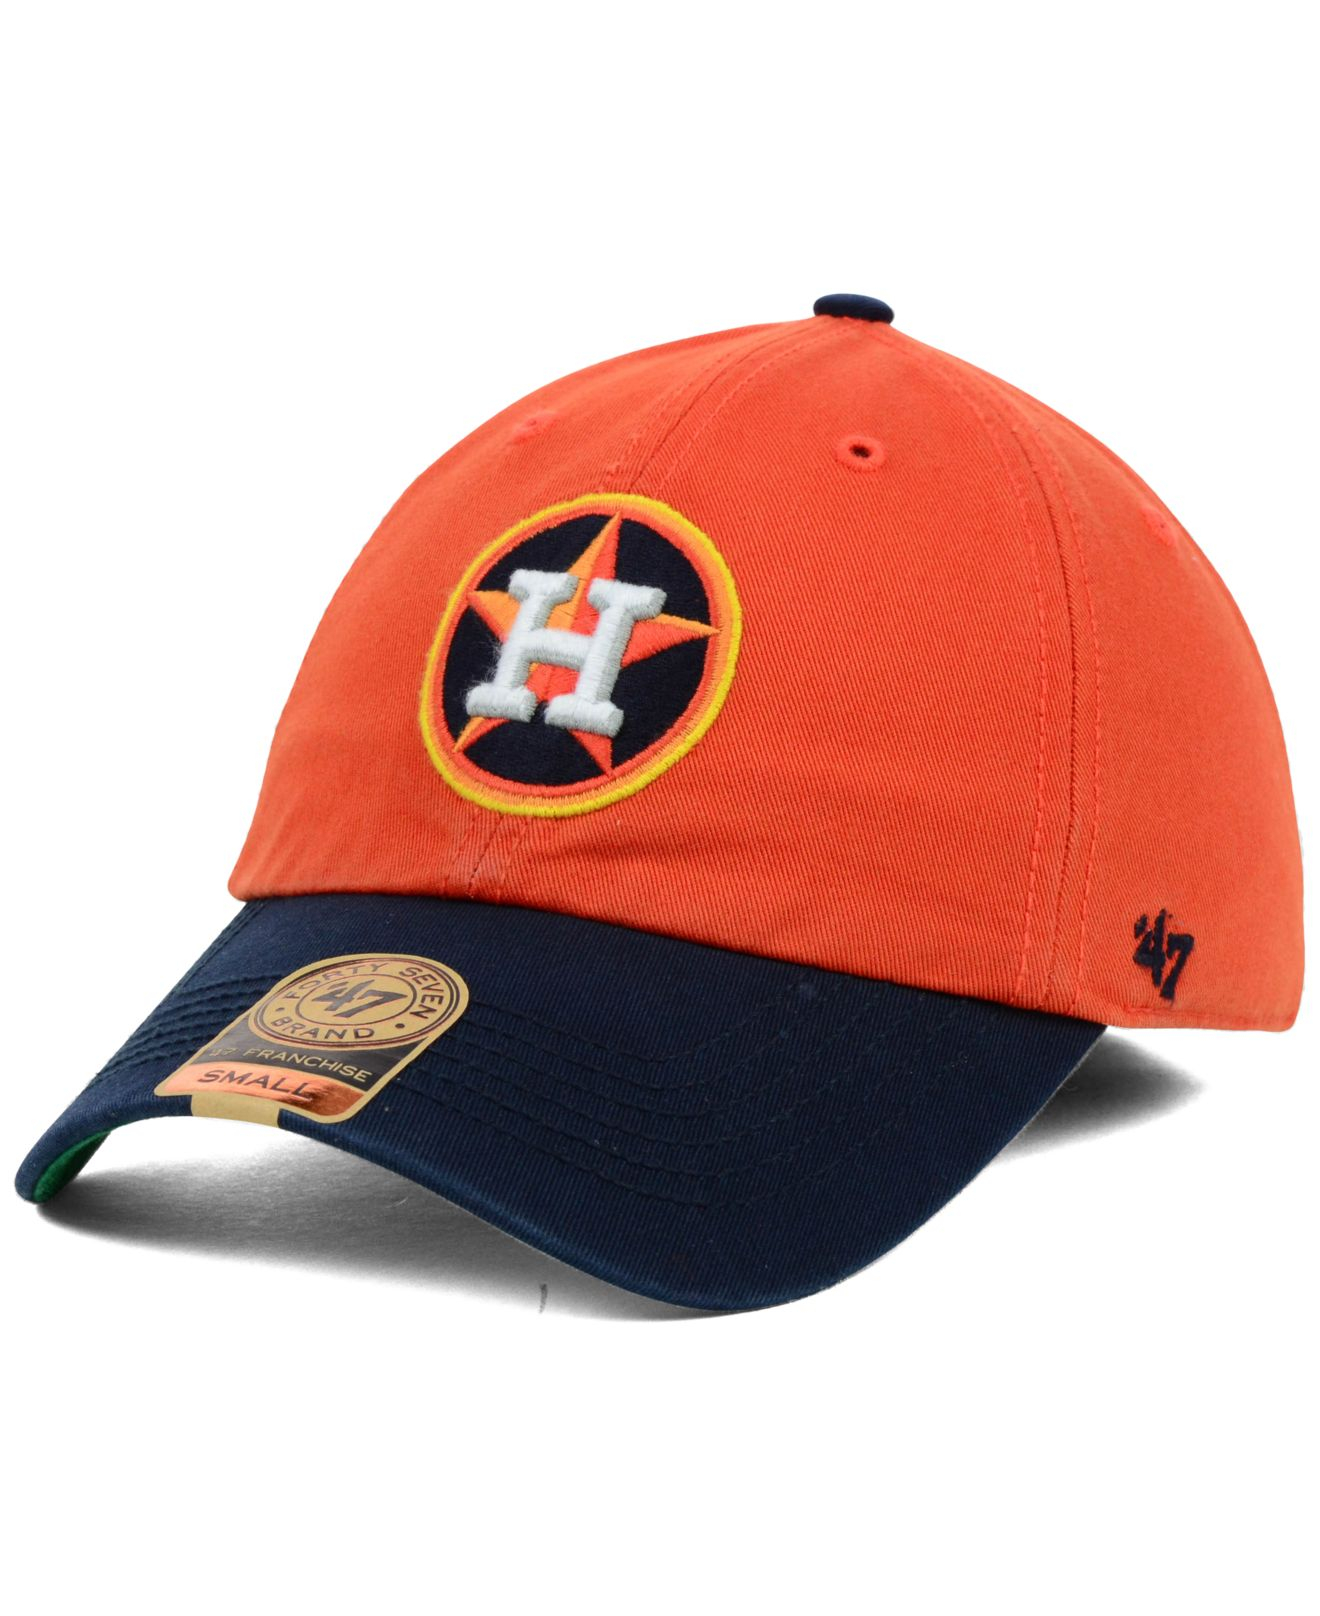 Lyst - 47 Brand Houston Astros Bp Franchise Cap in Orange